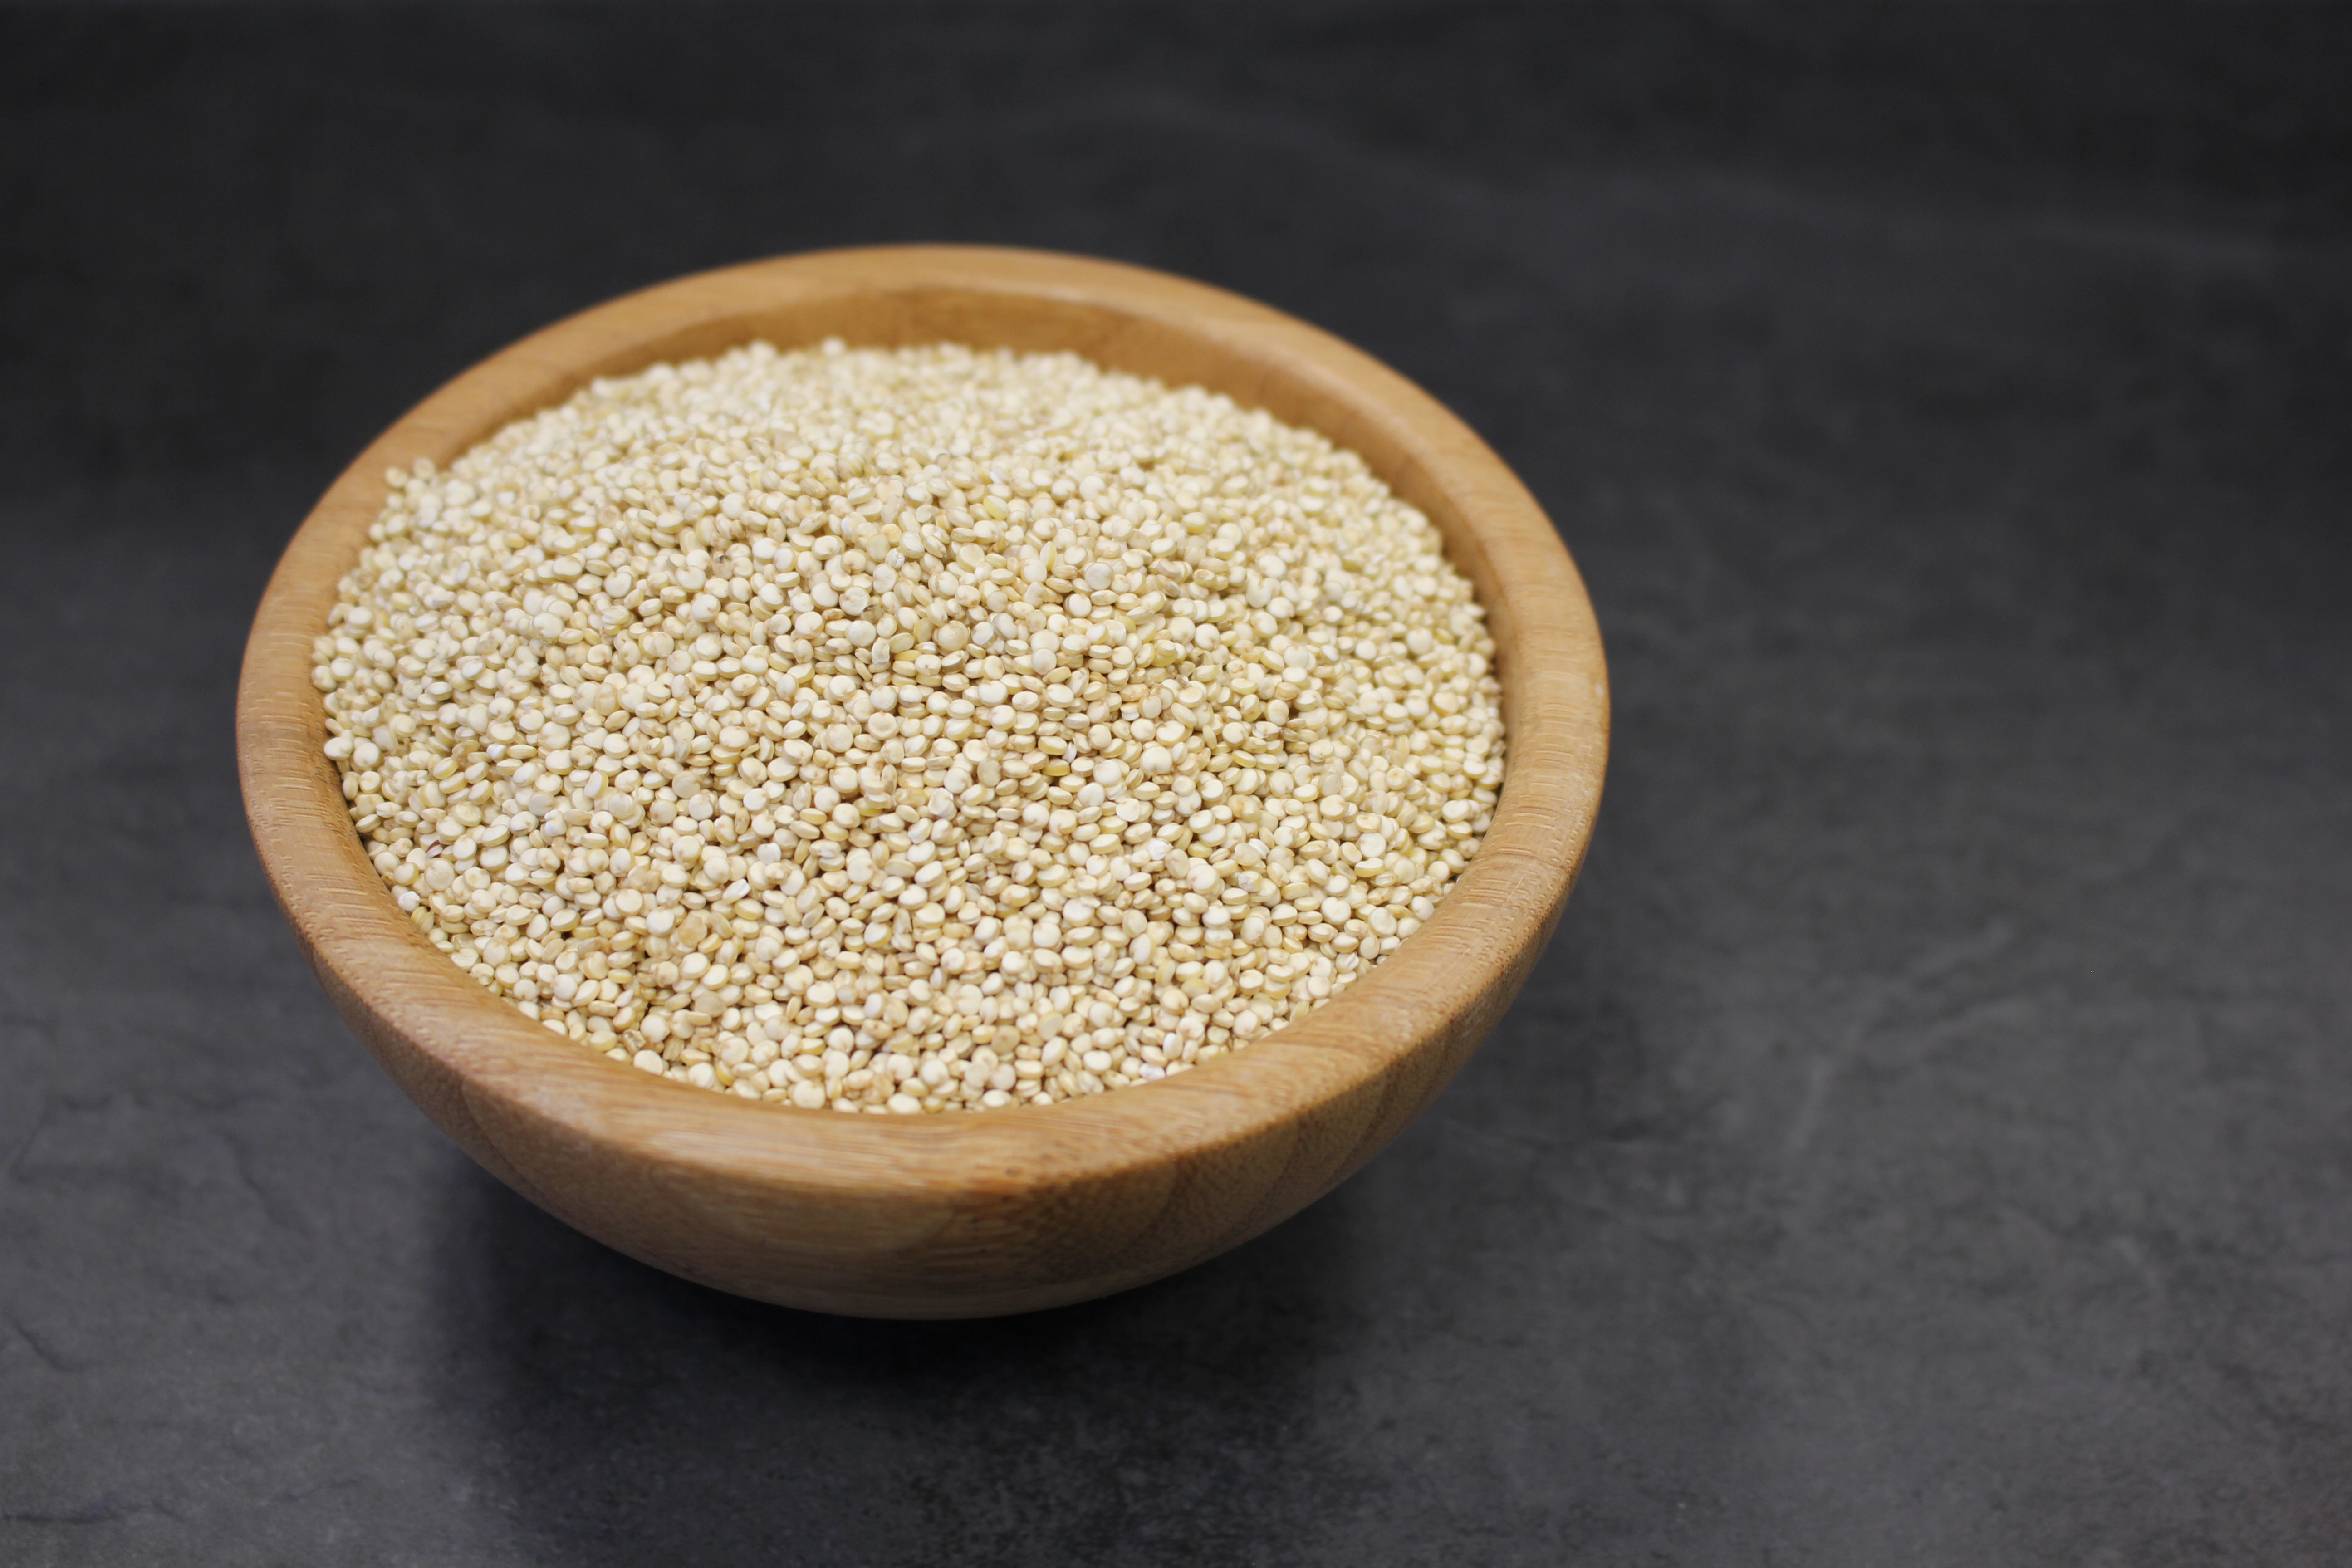 Grains & seeds (Quinoa, Chia seeds, and more)